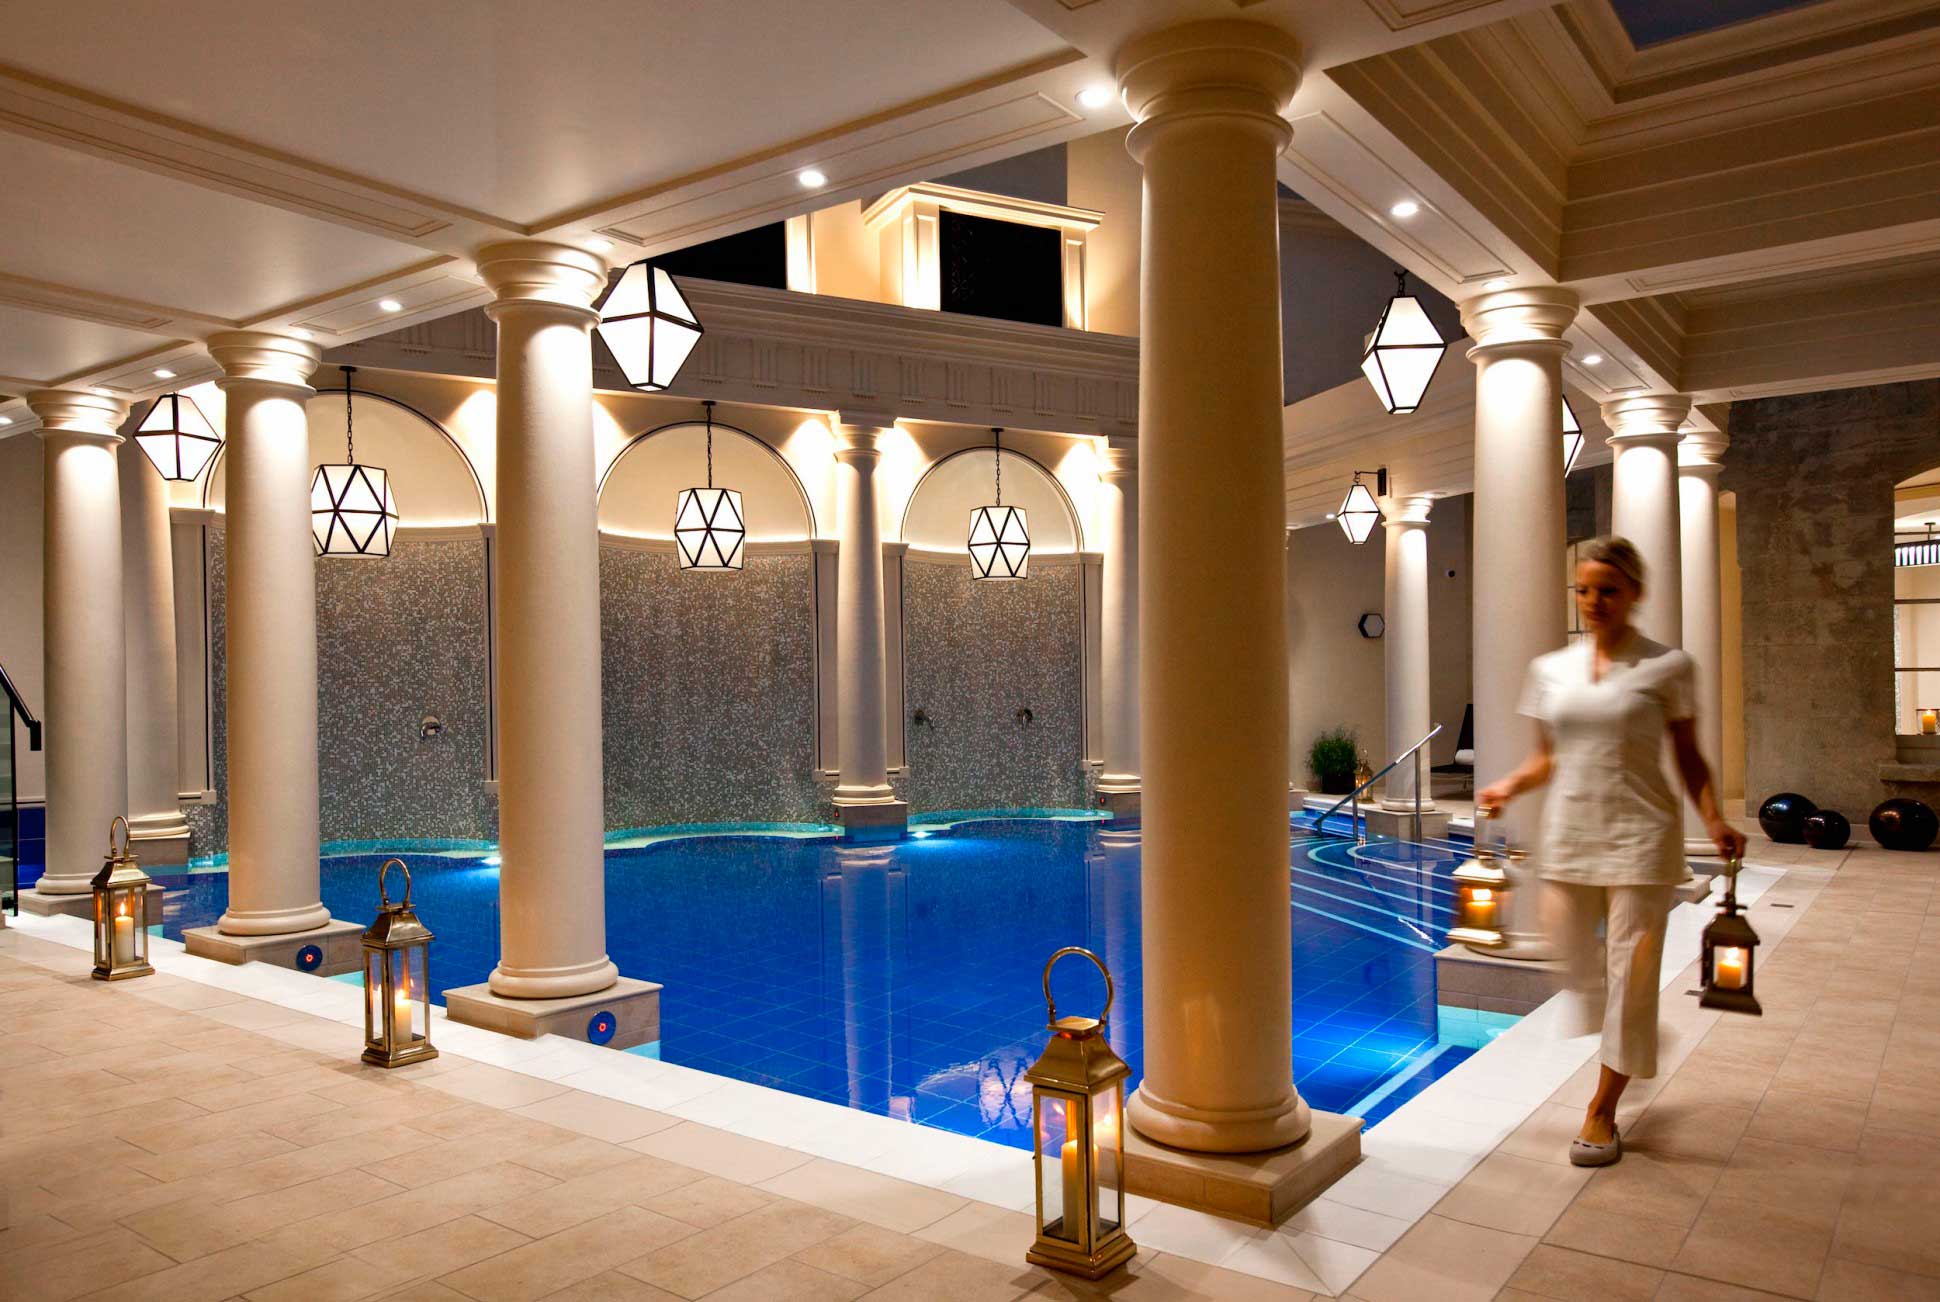 Crédito foto: http://www.forbes.com/sites/johnoseid/2015/09/04/the-gainsborough-bath-spa-the-u-ks-hottest-new-hotel/#52ed974c96c4